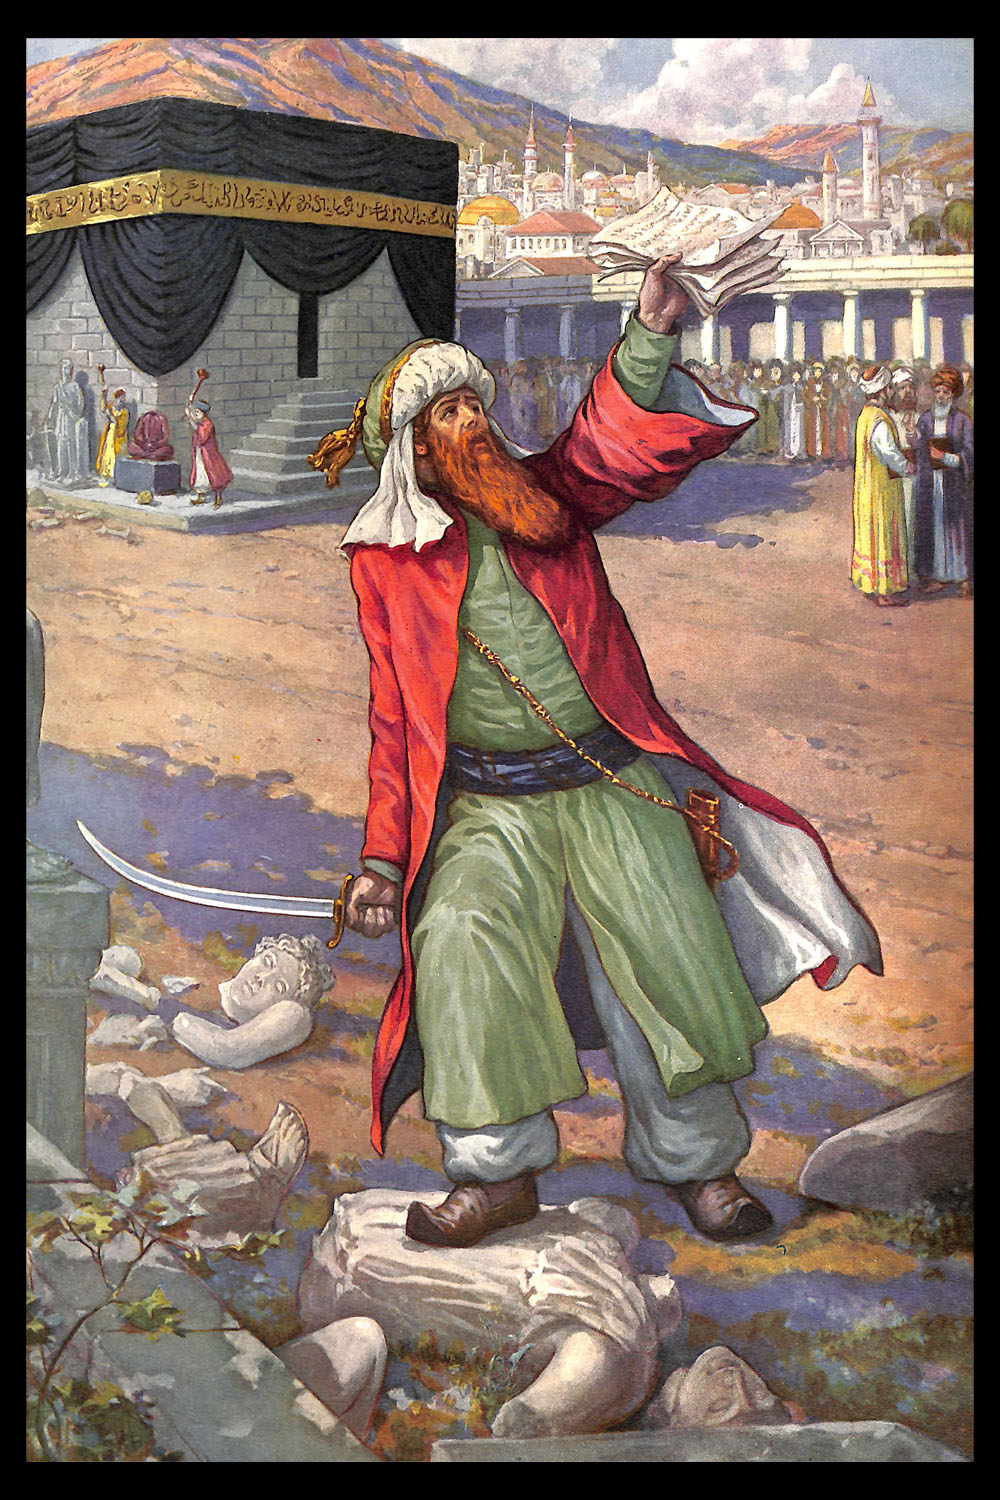 PLATE 38: Mohammed Destroying Idols